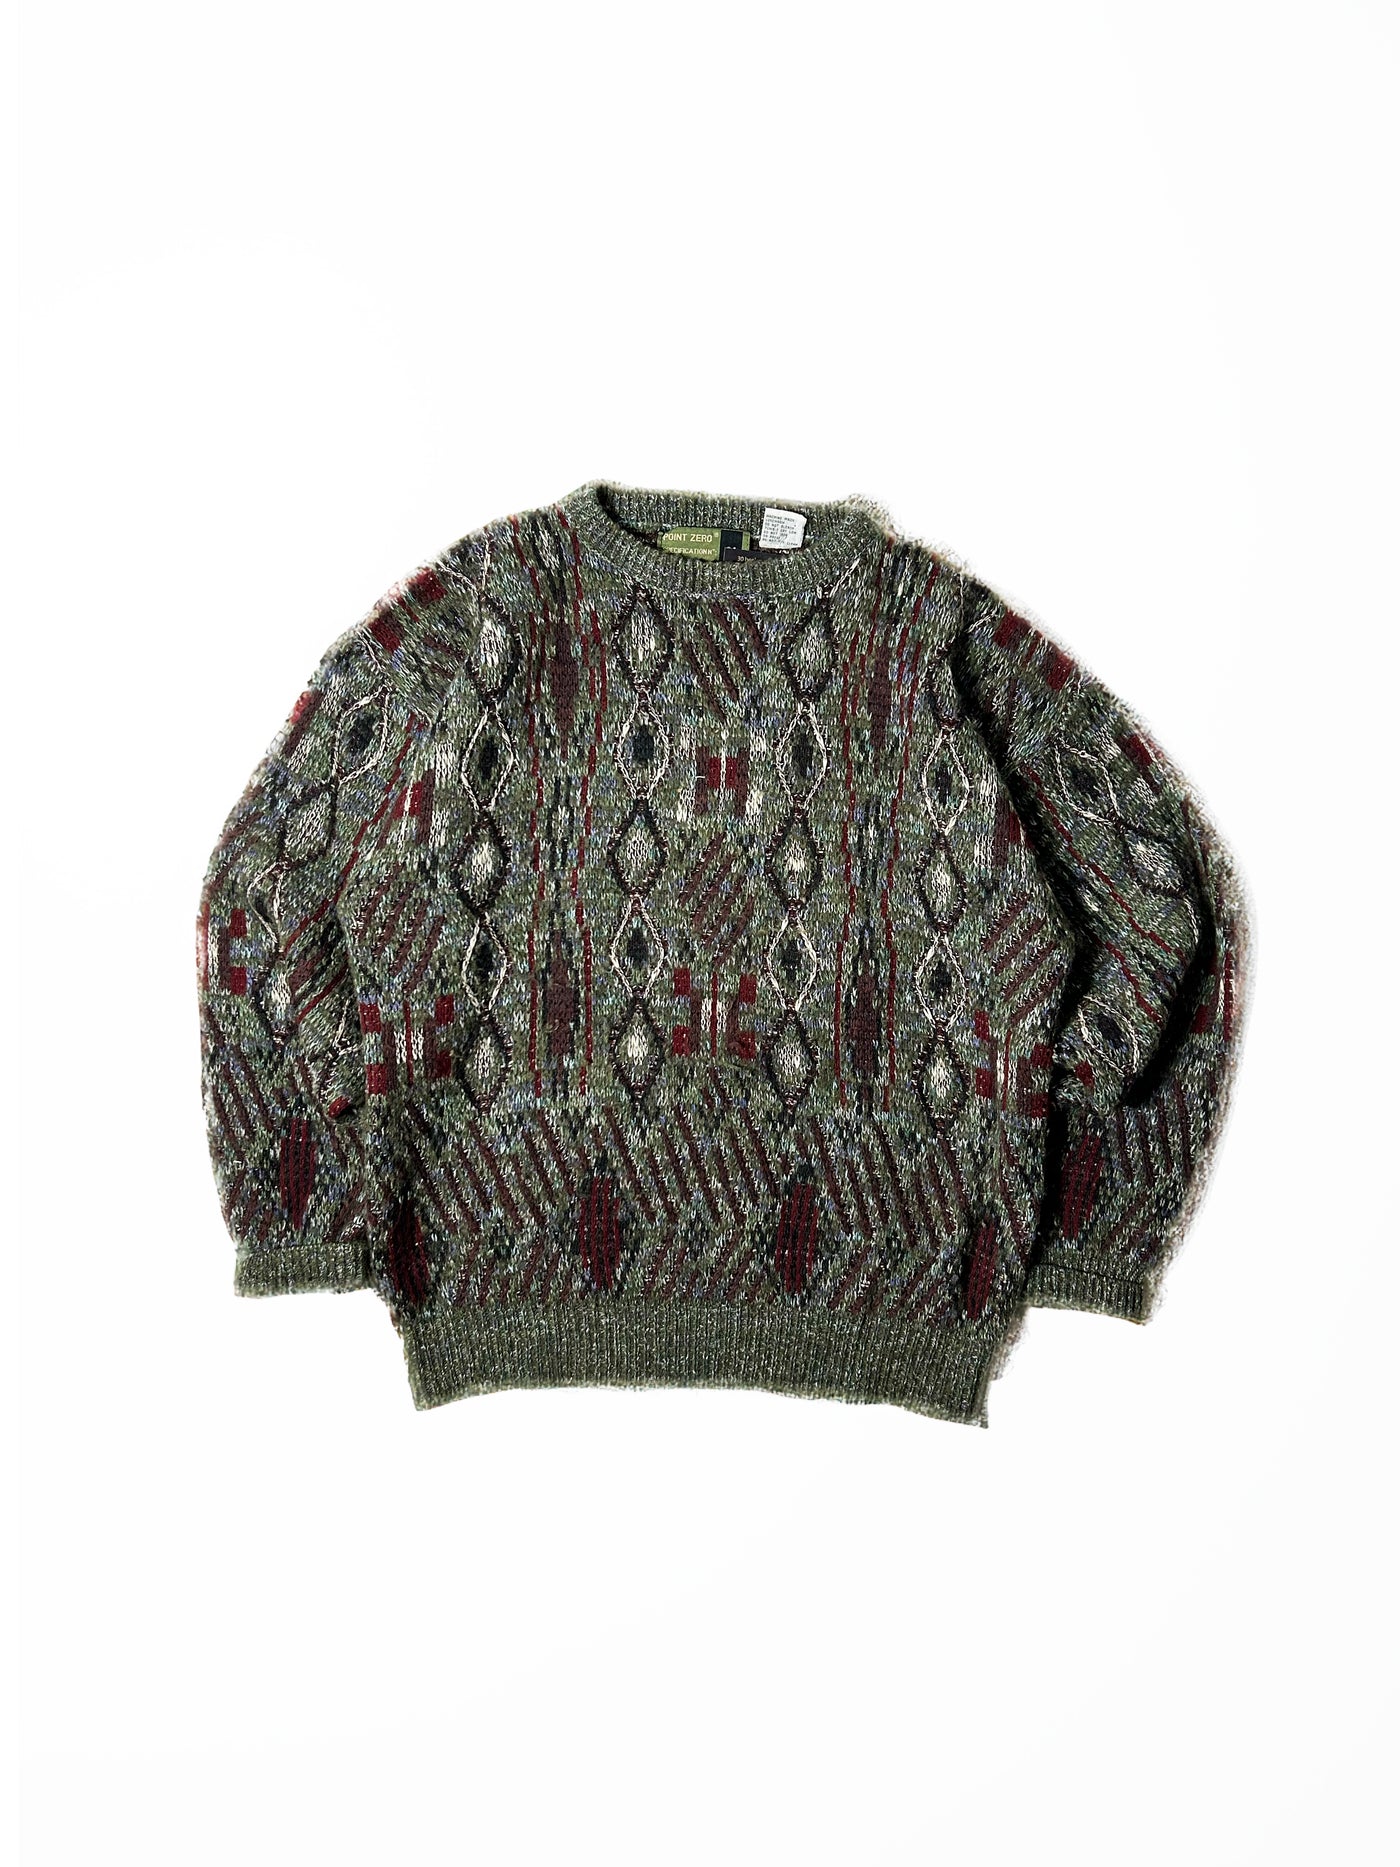 Vintage 80s Point Zero Lot 55 Sweater